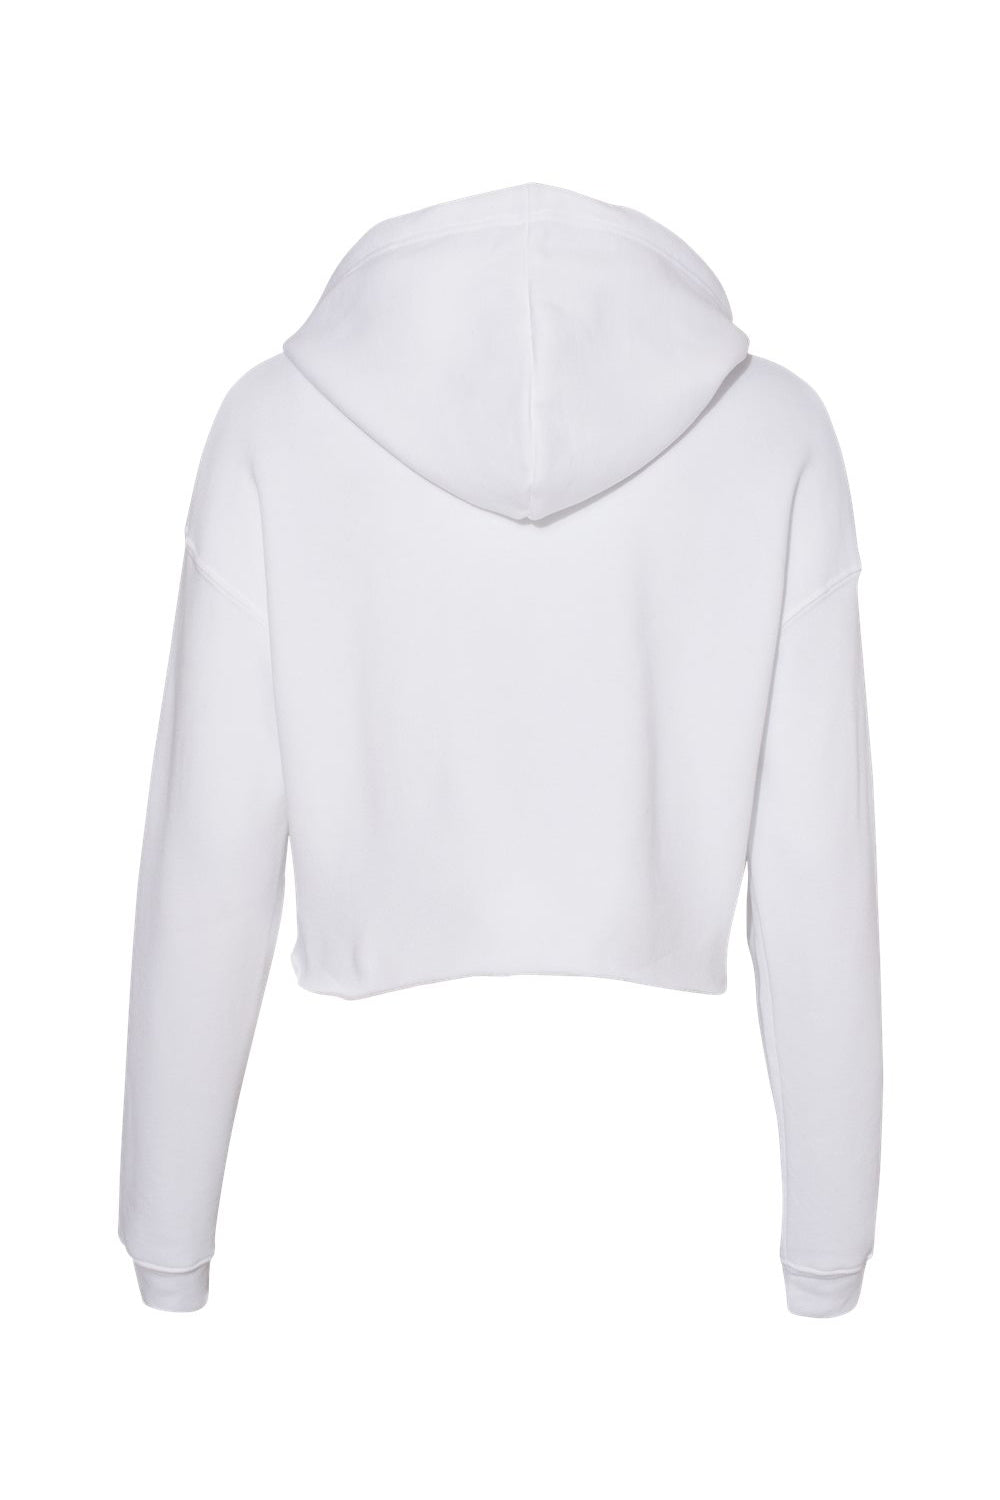 Bella + Canvas BC7502/B7502/7502 Womens Cropped Fleece Hooded Sweatshirt Hoodie White Flat Back